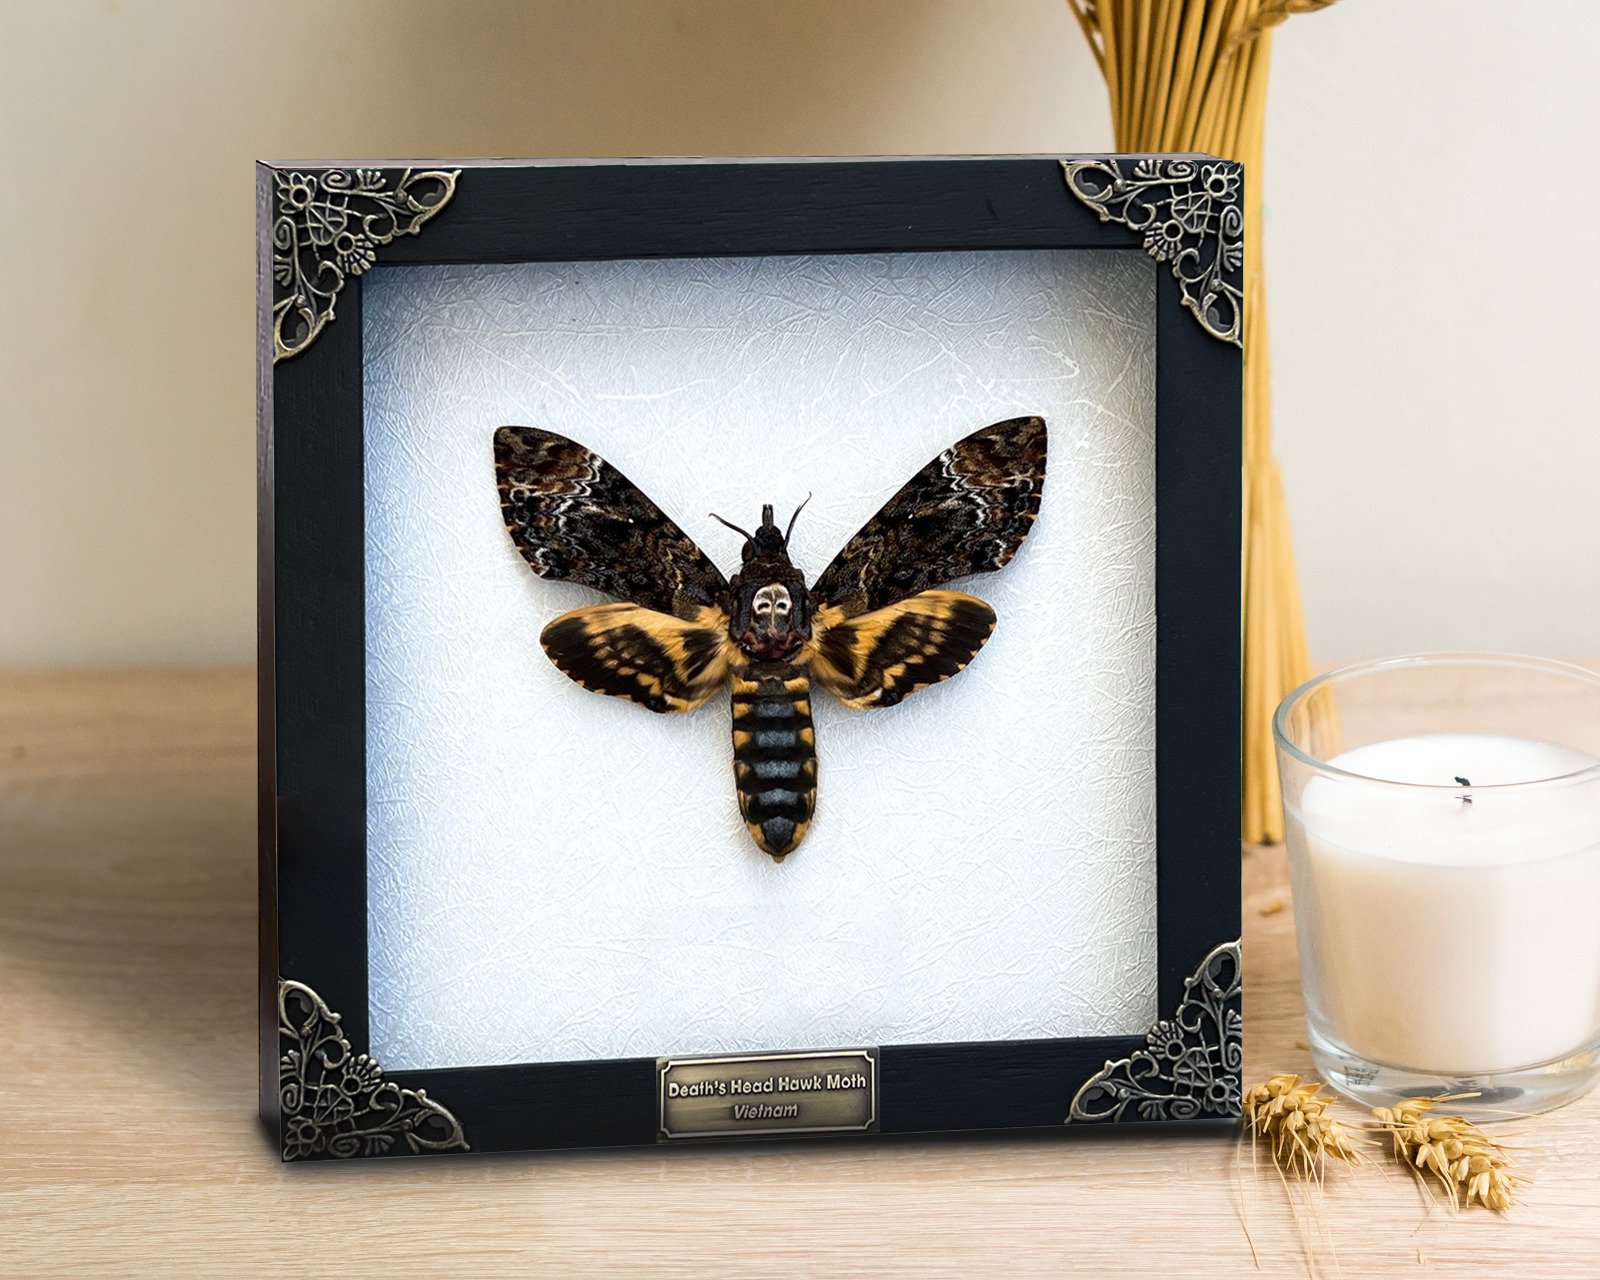 Real Death Head Moth Skull Acherontia Butterfly Insect Frame Taxidermy Art Decor